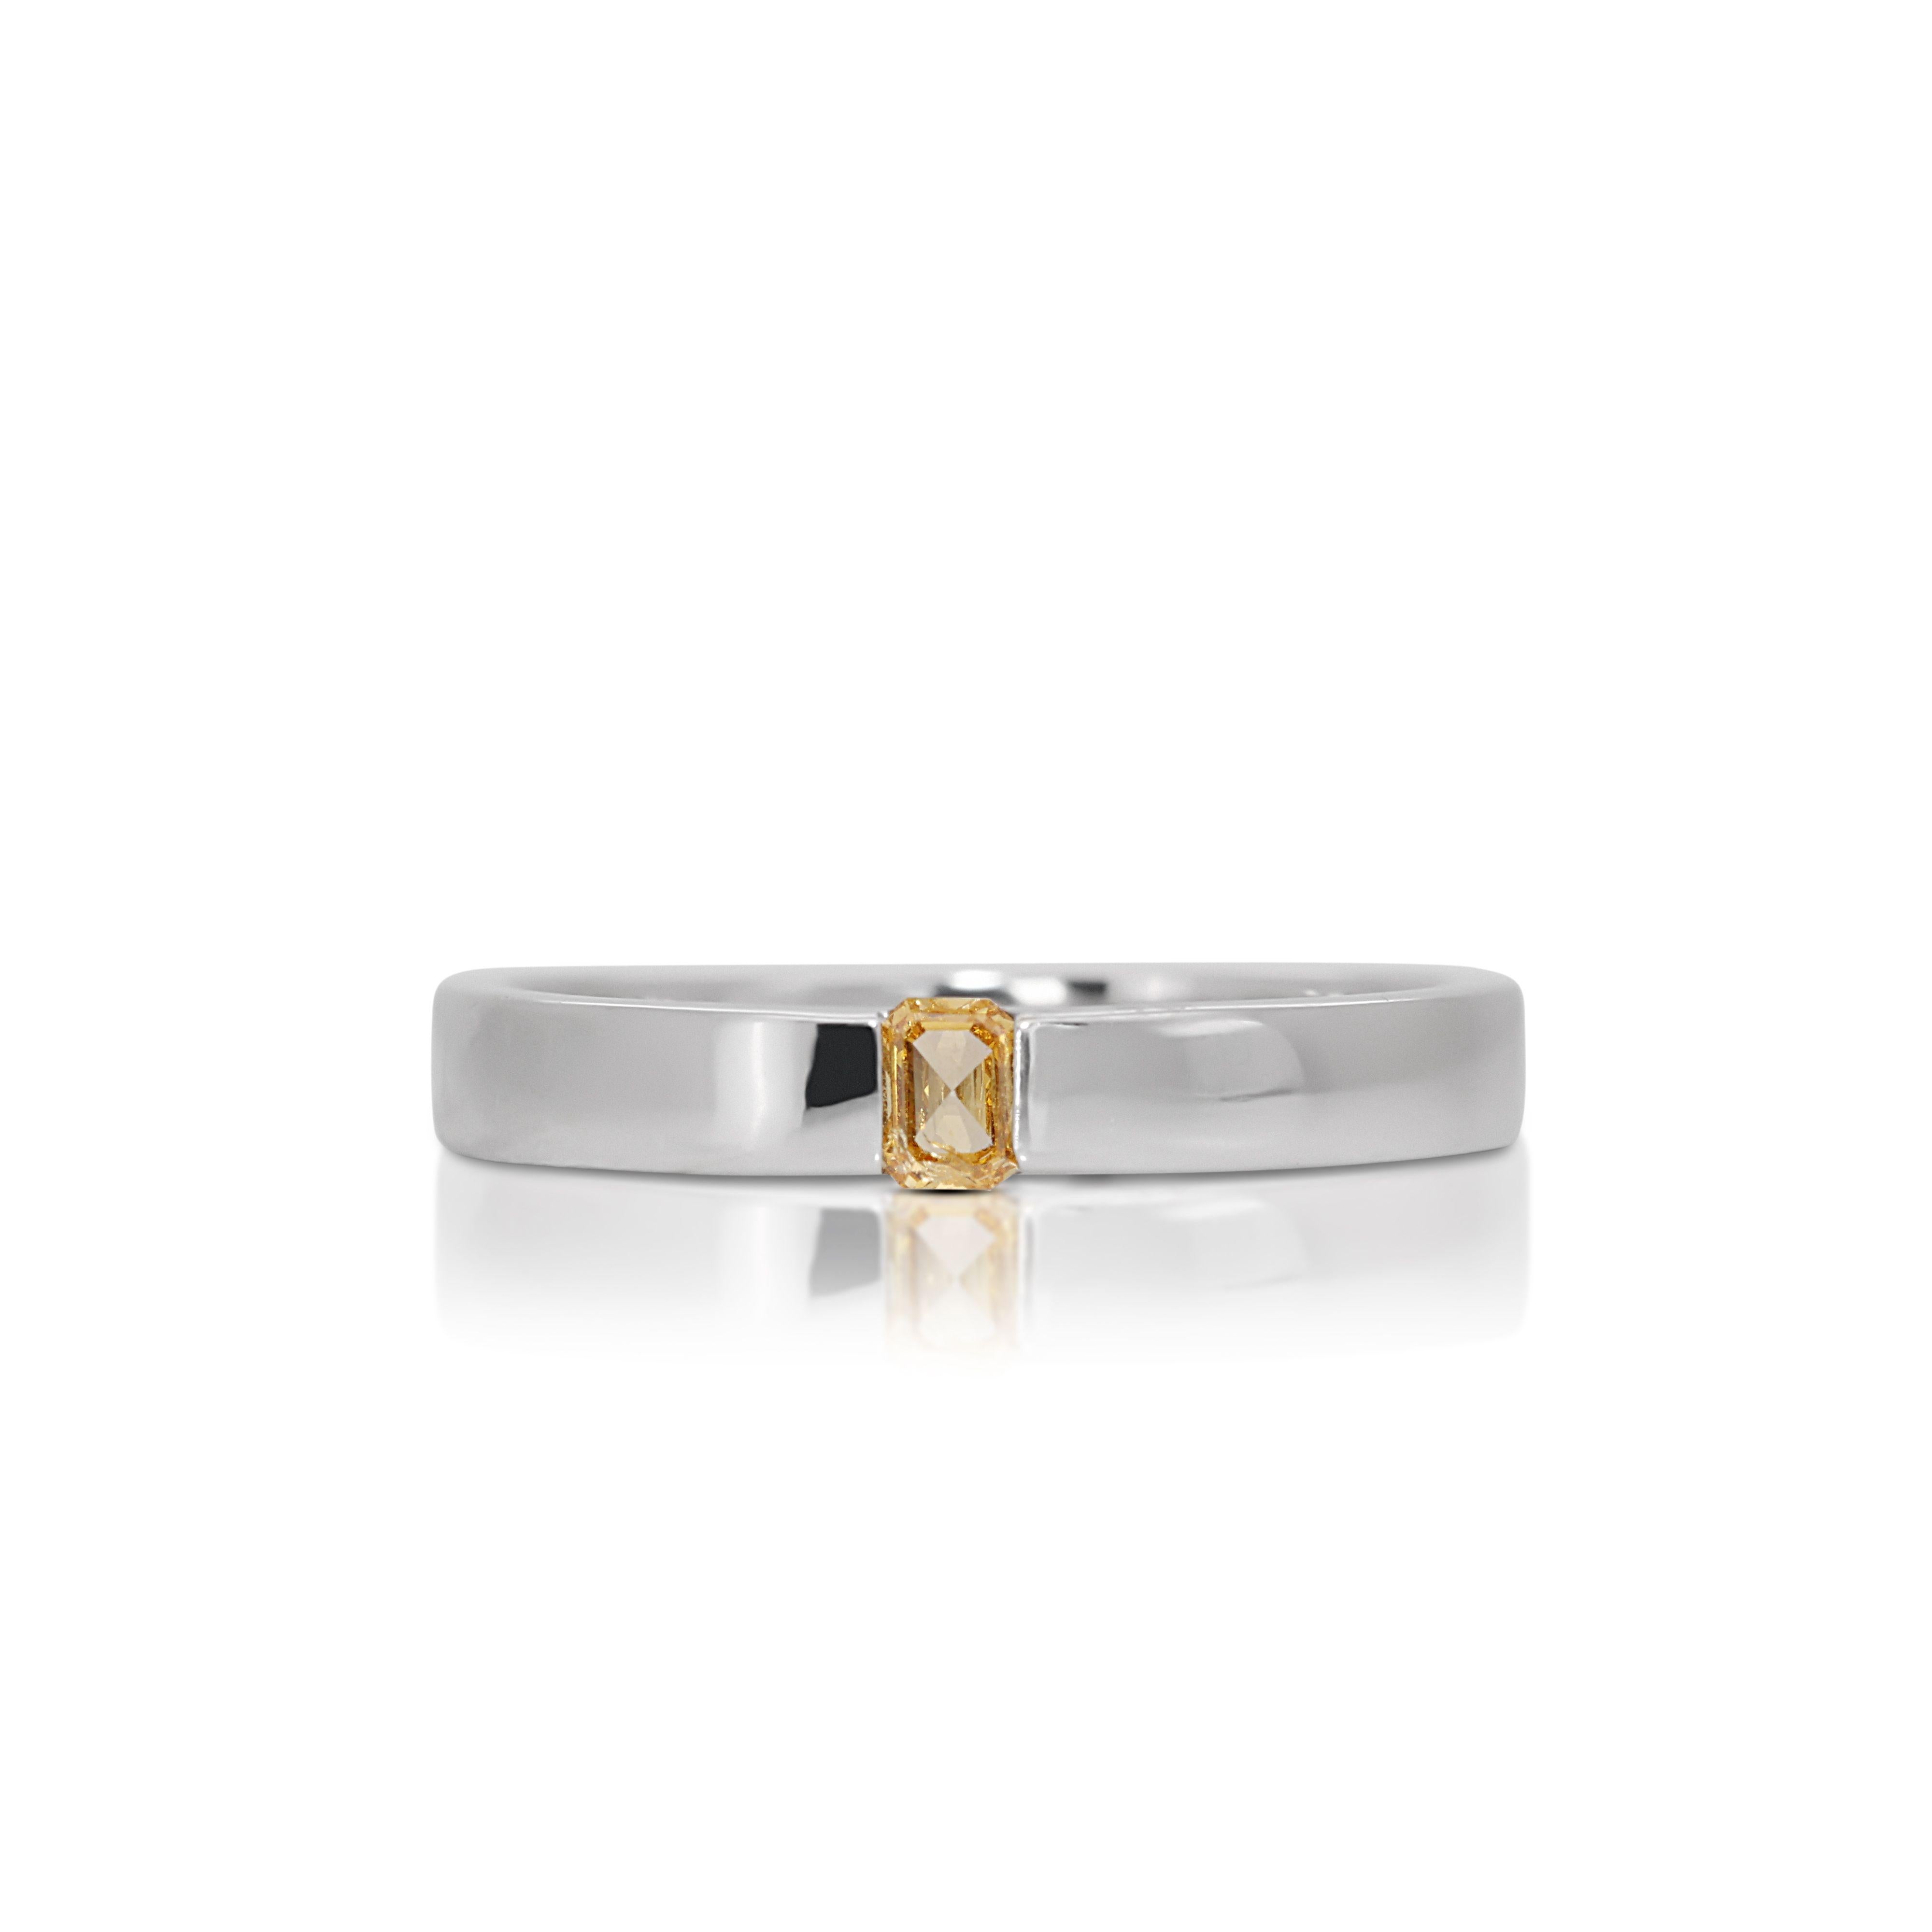 Atemberaubender Ring aus 18 Karat Weißgold mit 0,10 Karat natürlichen Diamanten, NGI-Zertifikat im Angebot